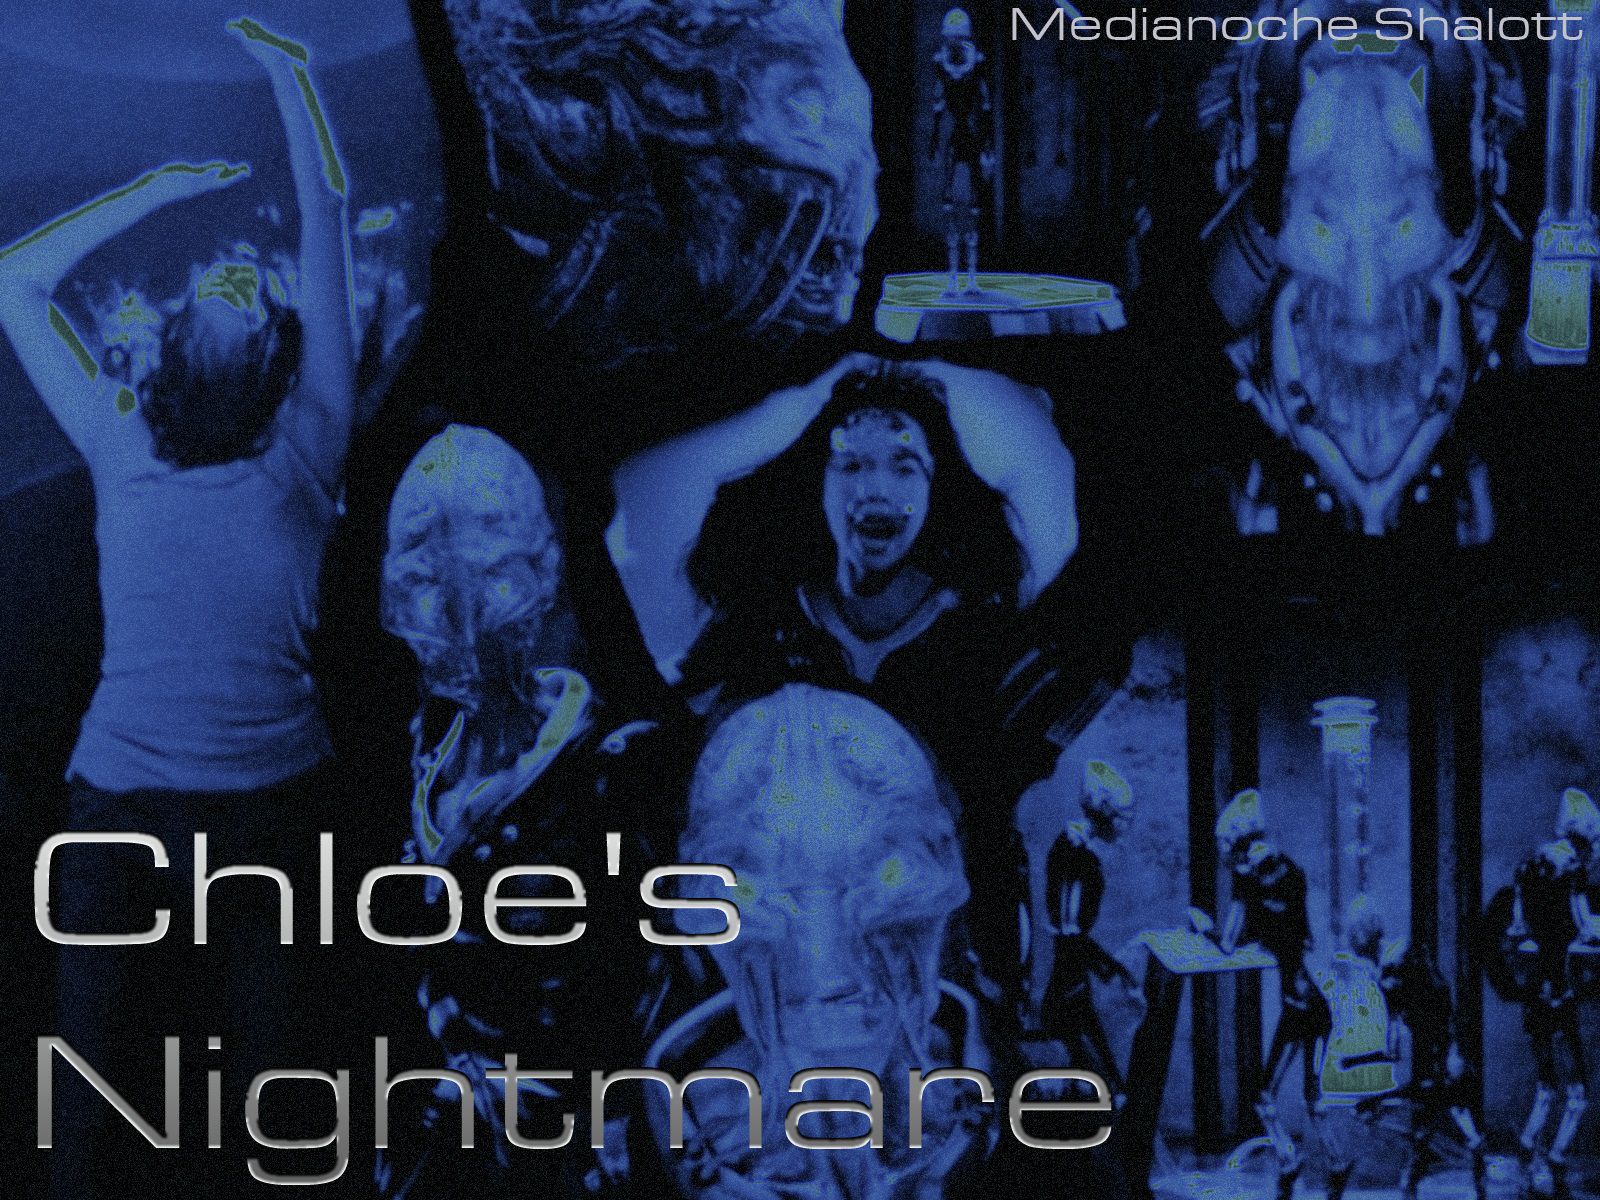 Chloe's Nightmare 2.0 - Stargate Universe Wallpaper (26239194 ...